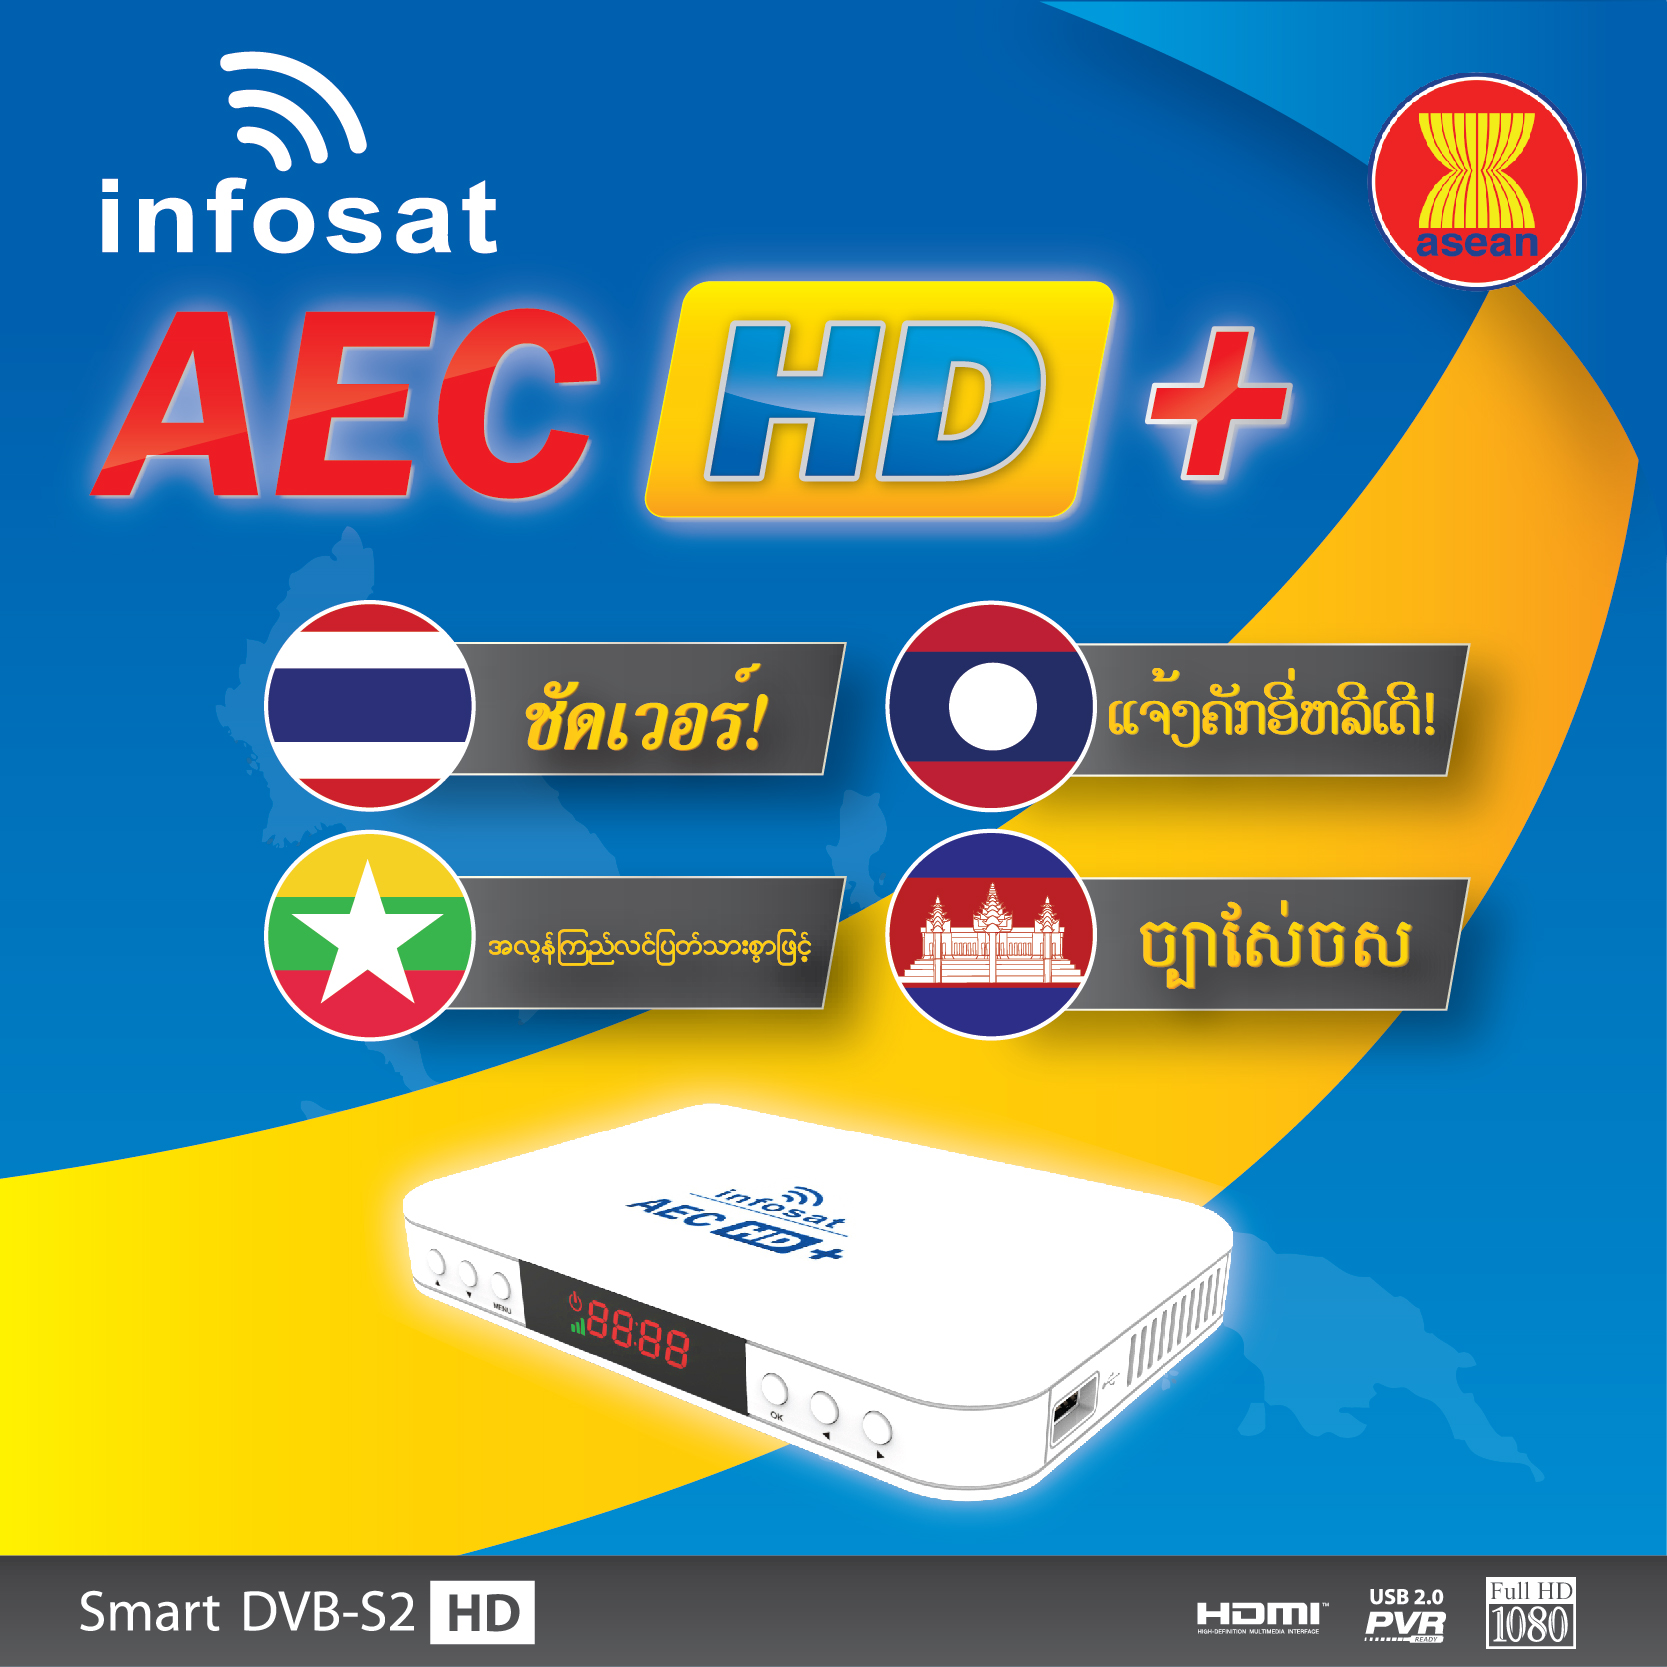  INFOSAT กล่องรับสัญญาณดาวเทียม HD รุ่น AEC HD+